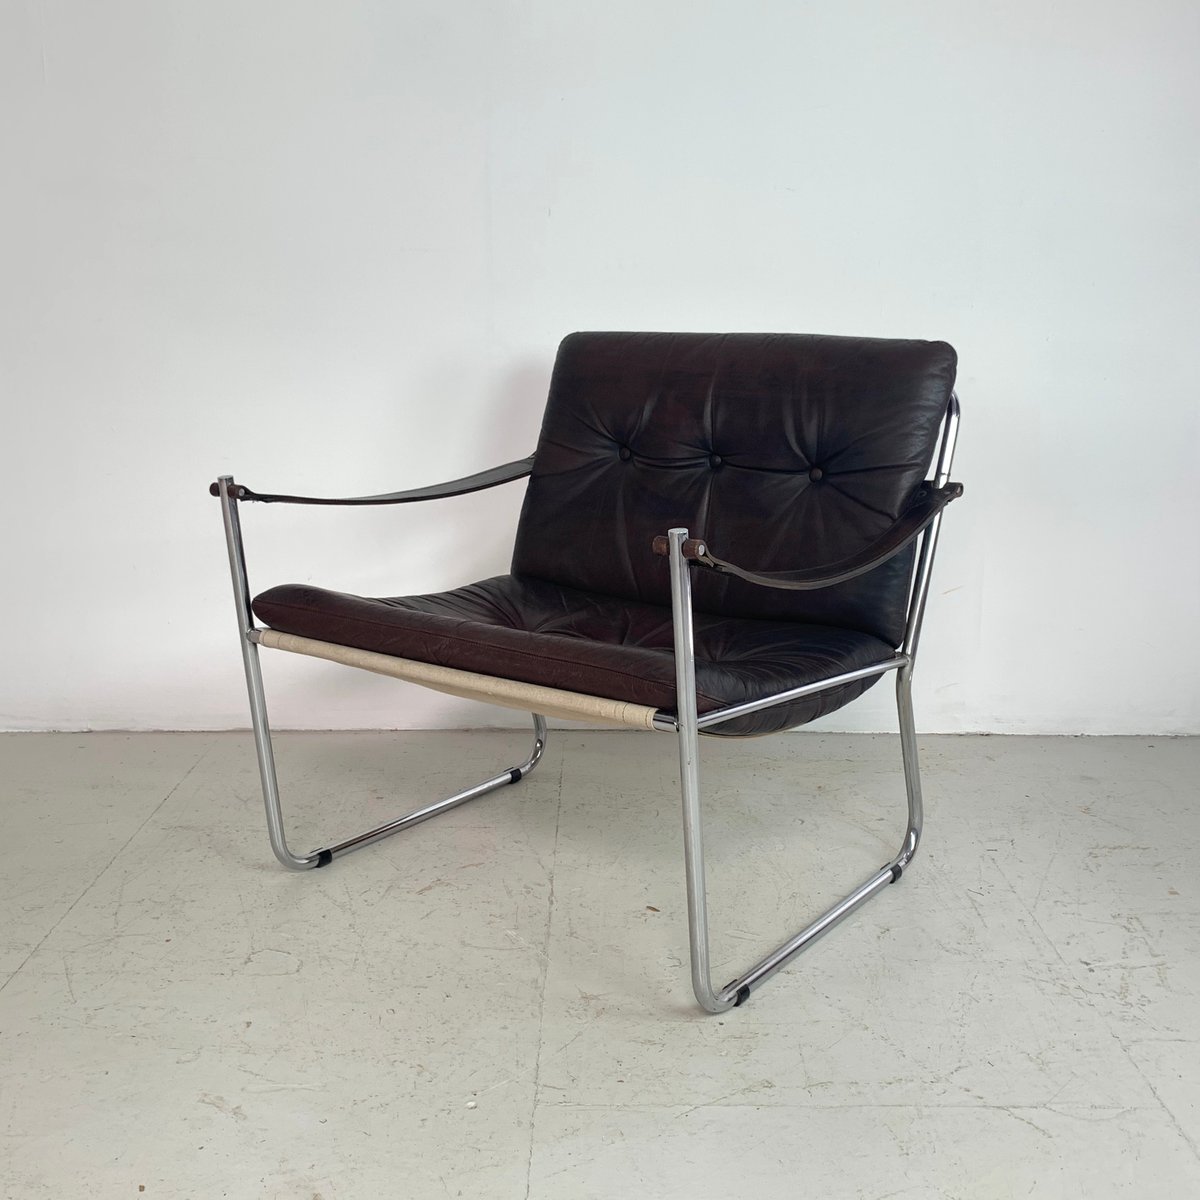 1611685158-vintage-chrome-and-leather-safari-chair-1970s-12.jpg